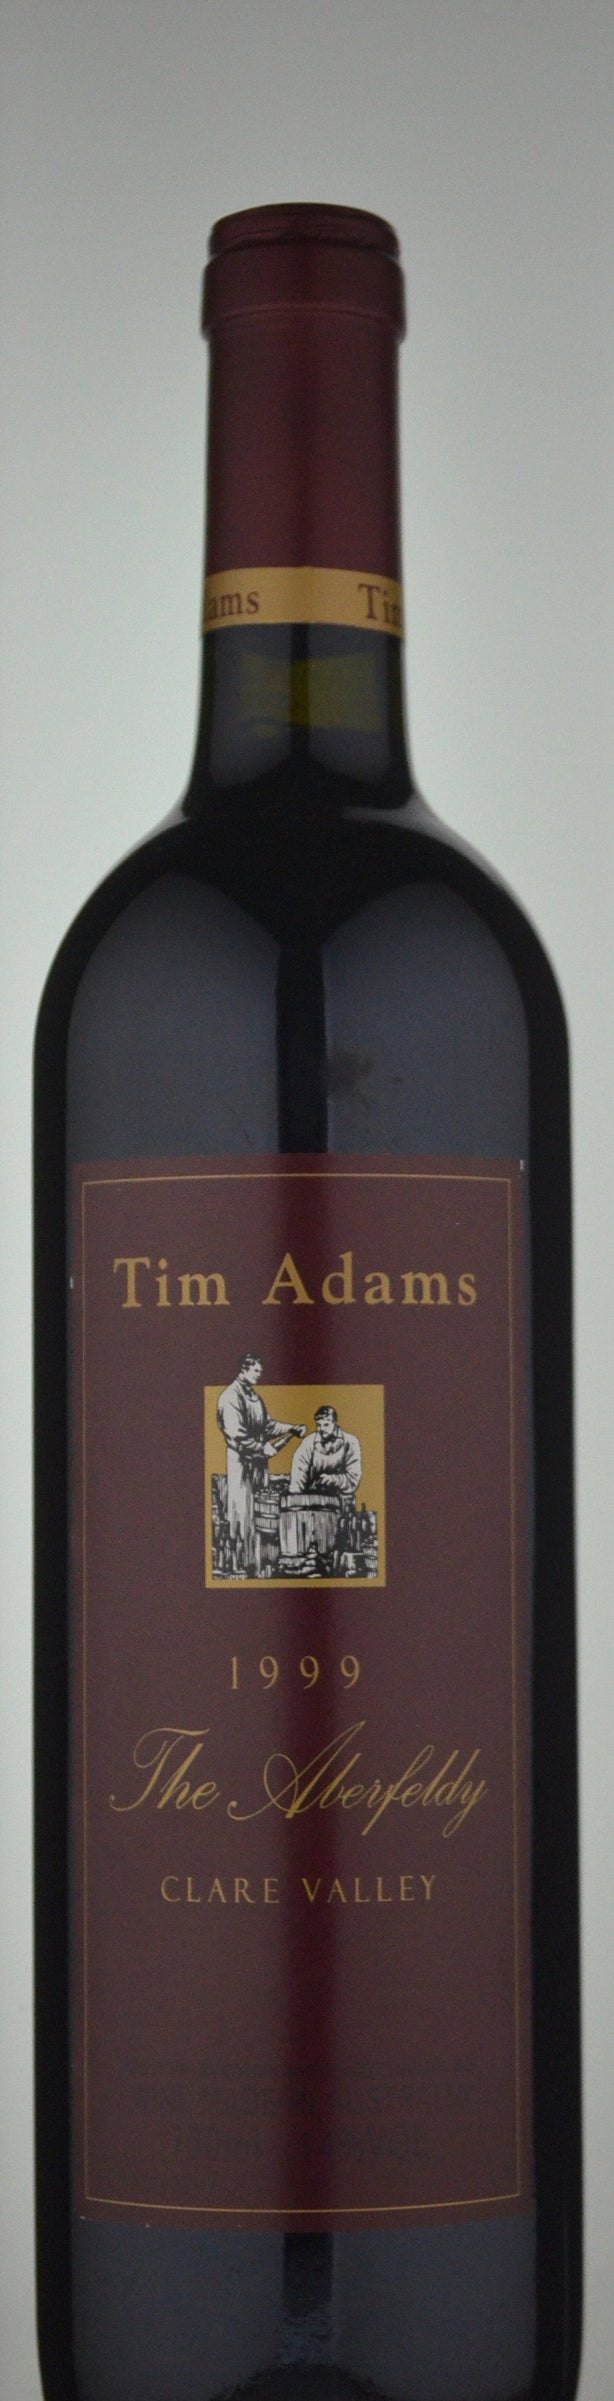 Tim Adams The Aberfeldy Shiraz 1999